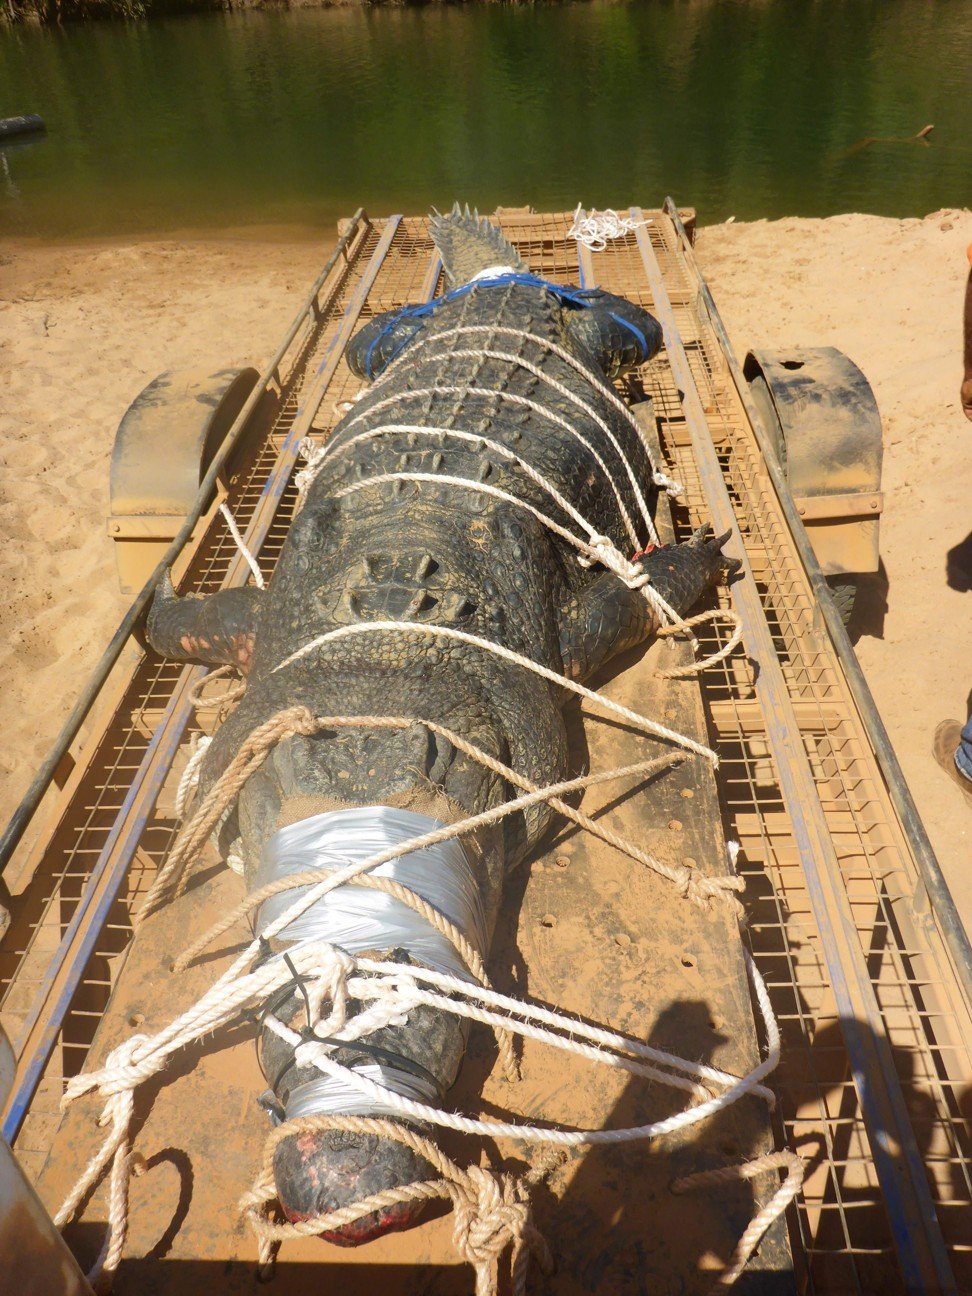 The captured saltwater crocodile weighs 600 kilograms. Photo: AFP